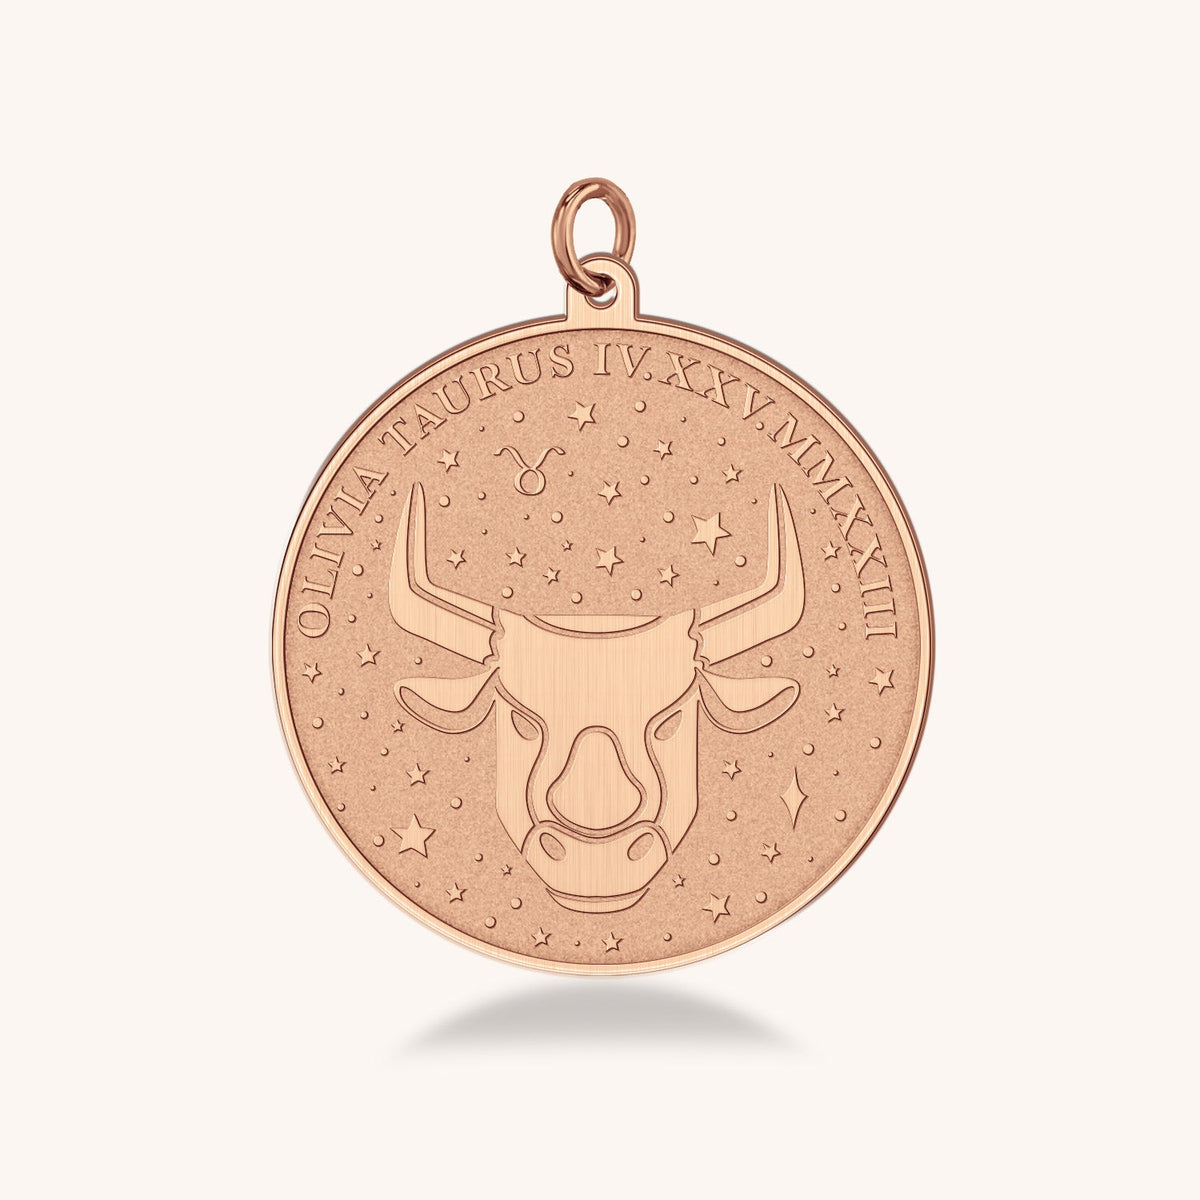 14k Gold Taurus Zodiac Medallion Necklace